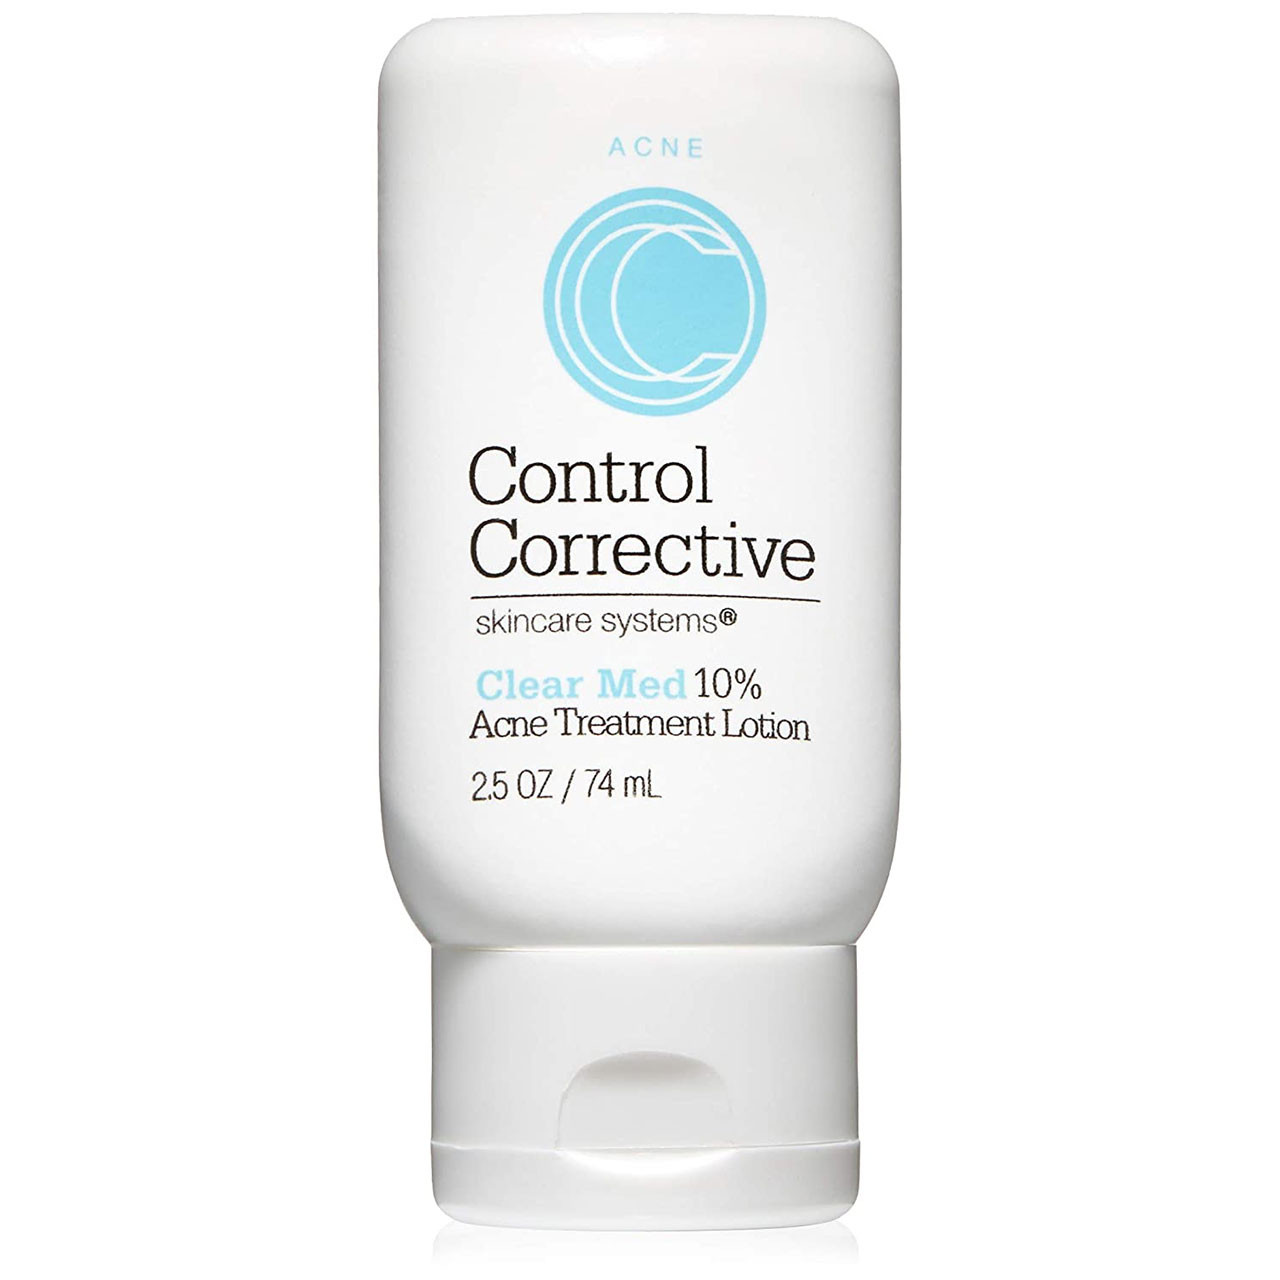 Control Corrective Clear Med 10% - 2.5 oz